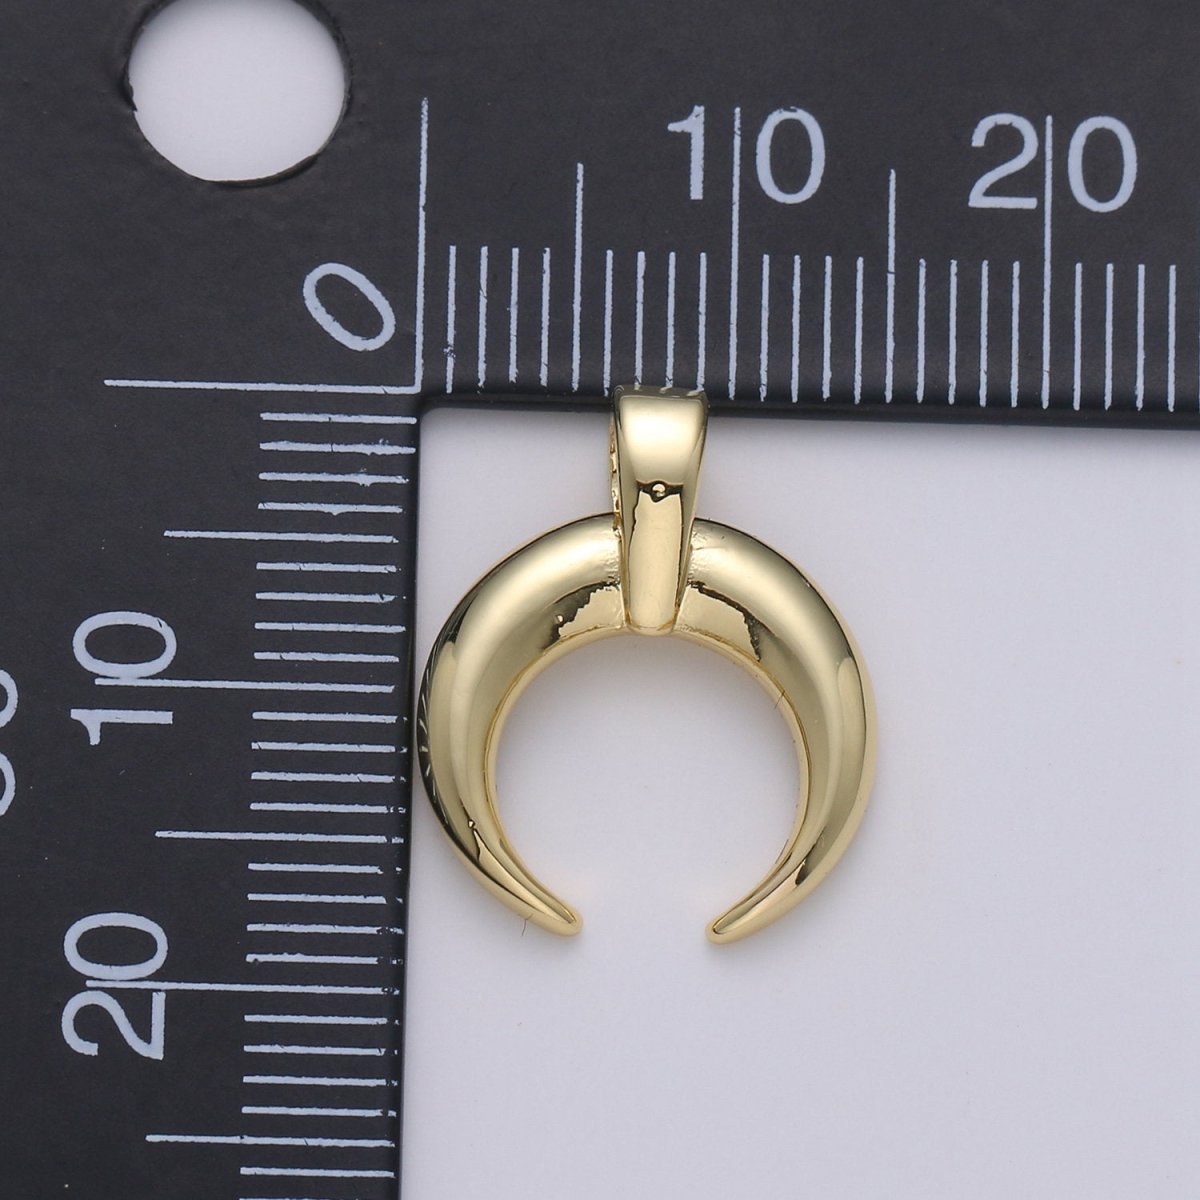 Gold Crescent Moon Horn Pendant - C shape wish moon charm, half moon, eclipse, tusk, Celestial Jewelry 14k gold Filled Charm J-015 - DLUXCA